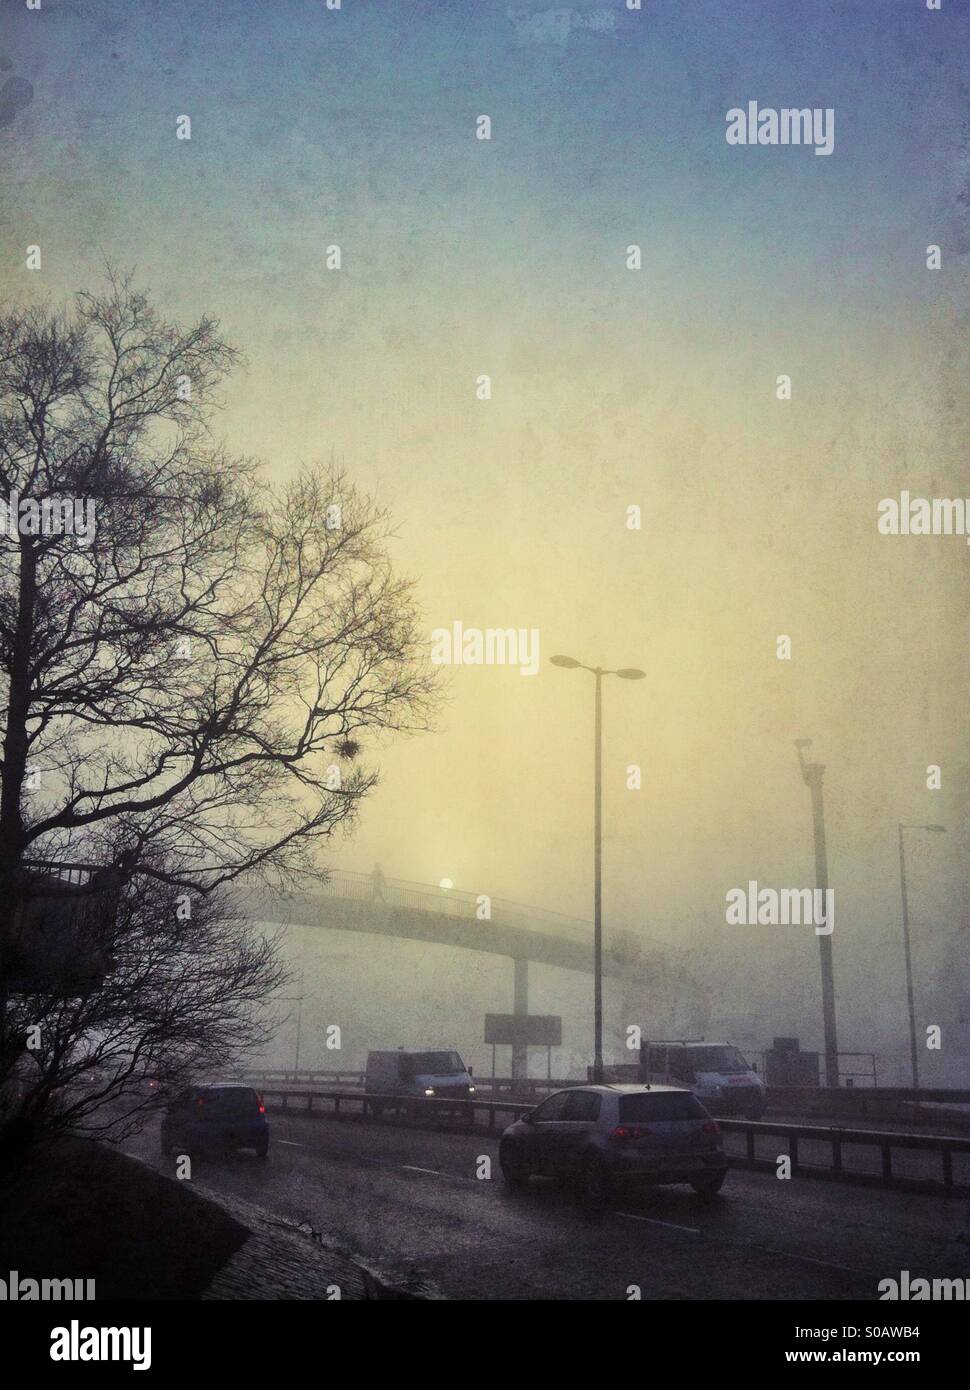 Traffic in fog. Stock Photo